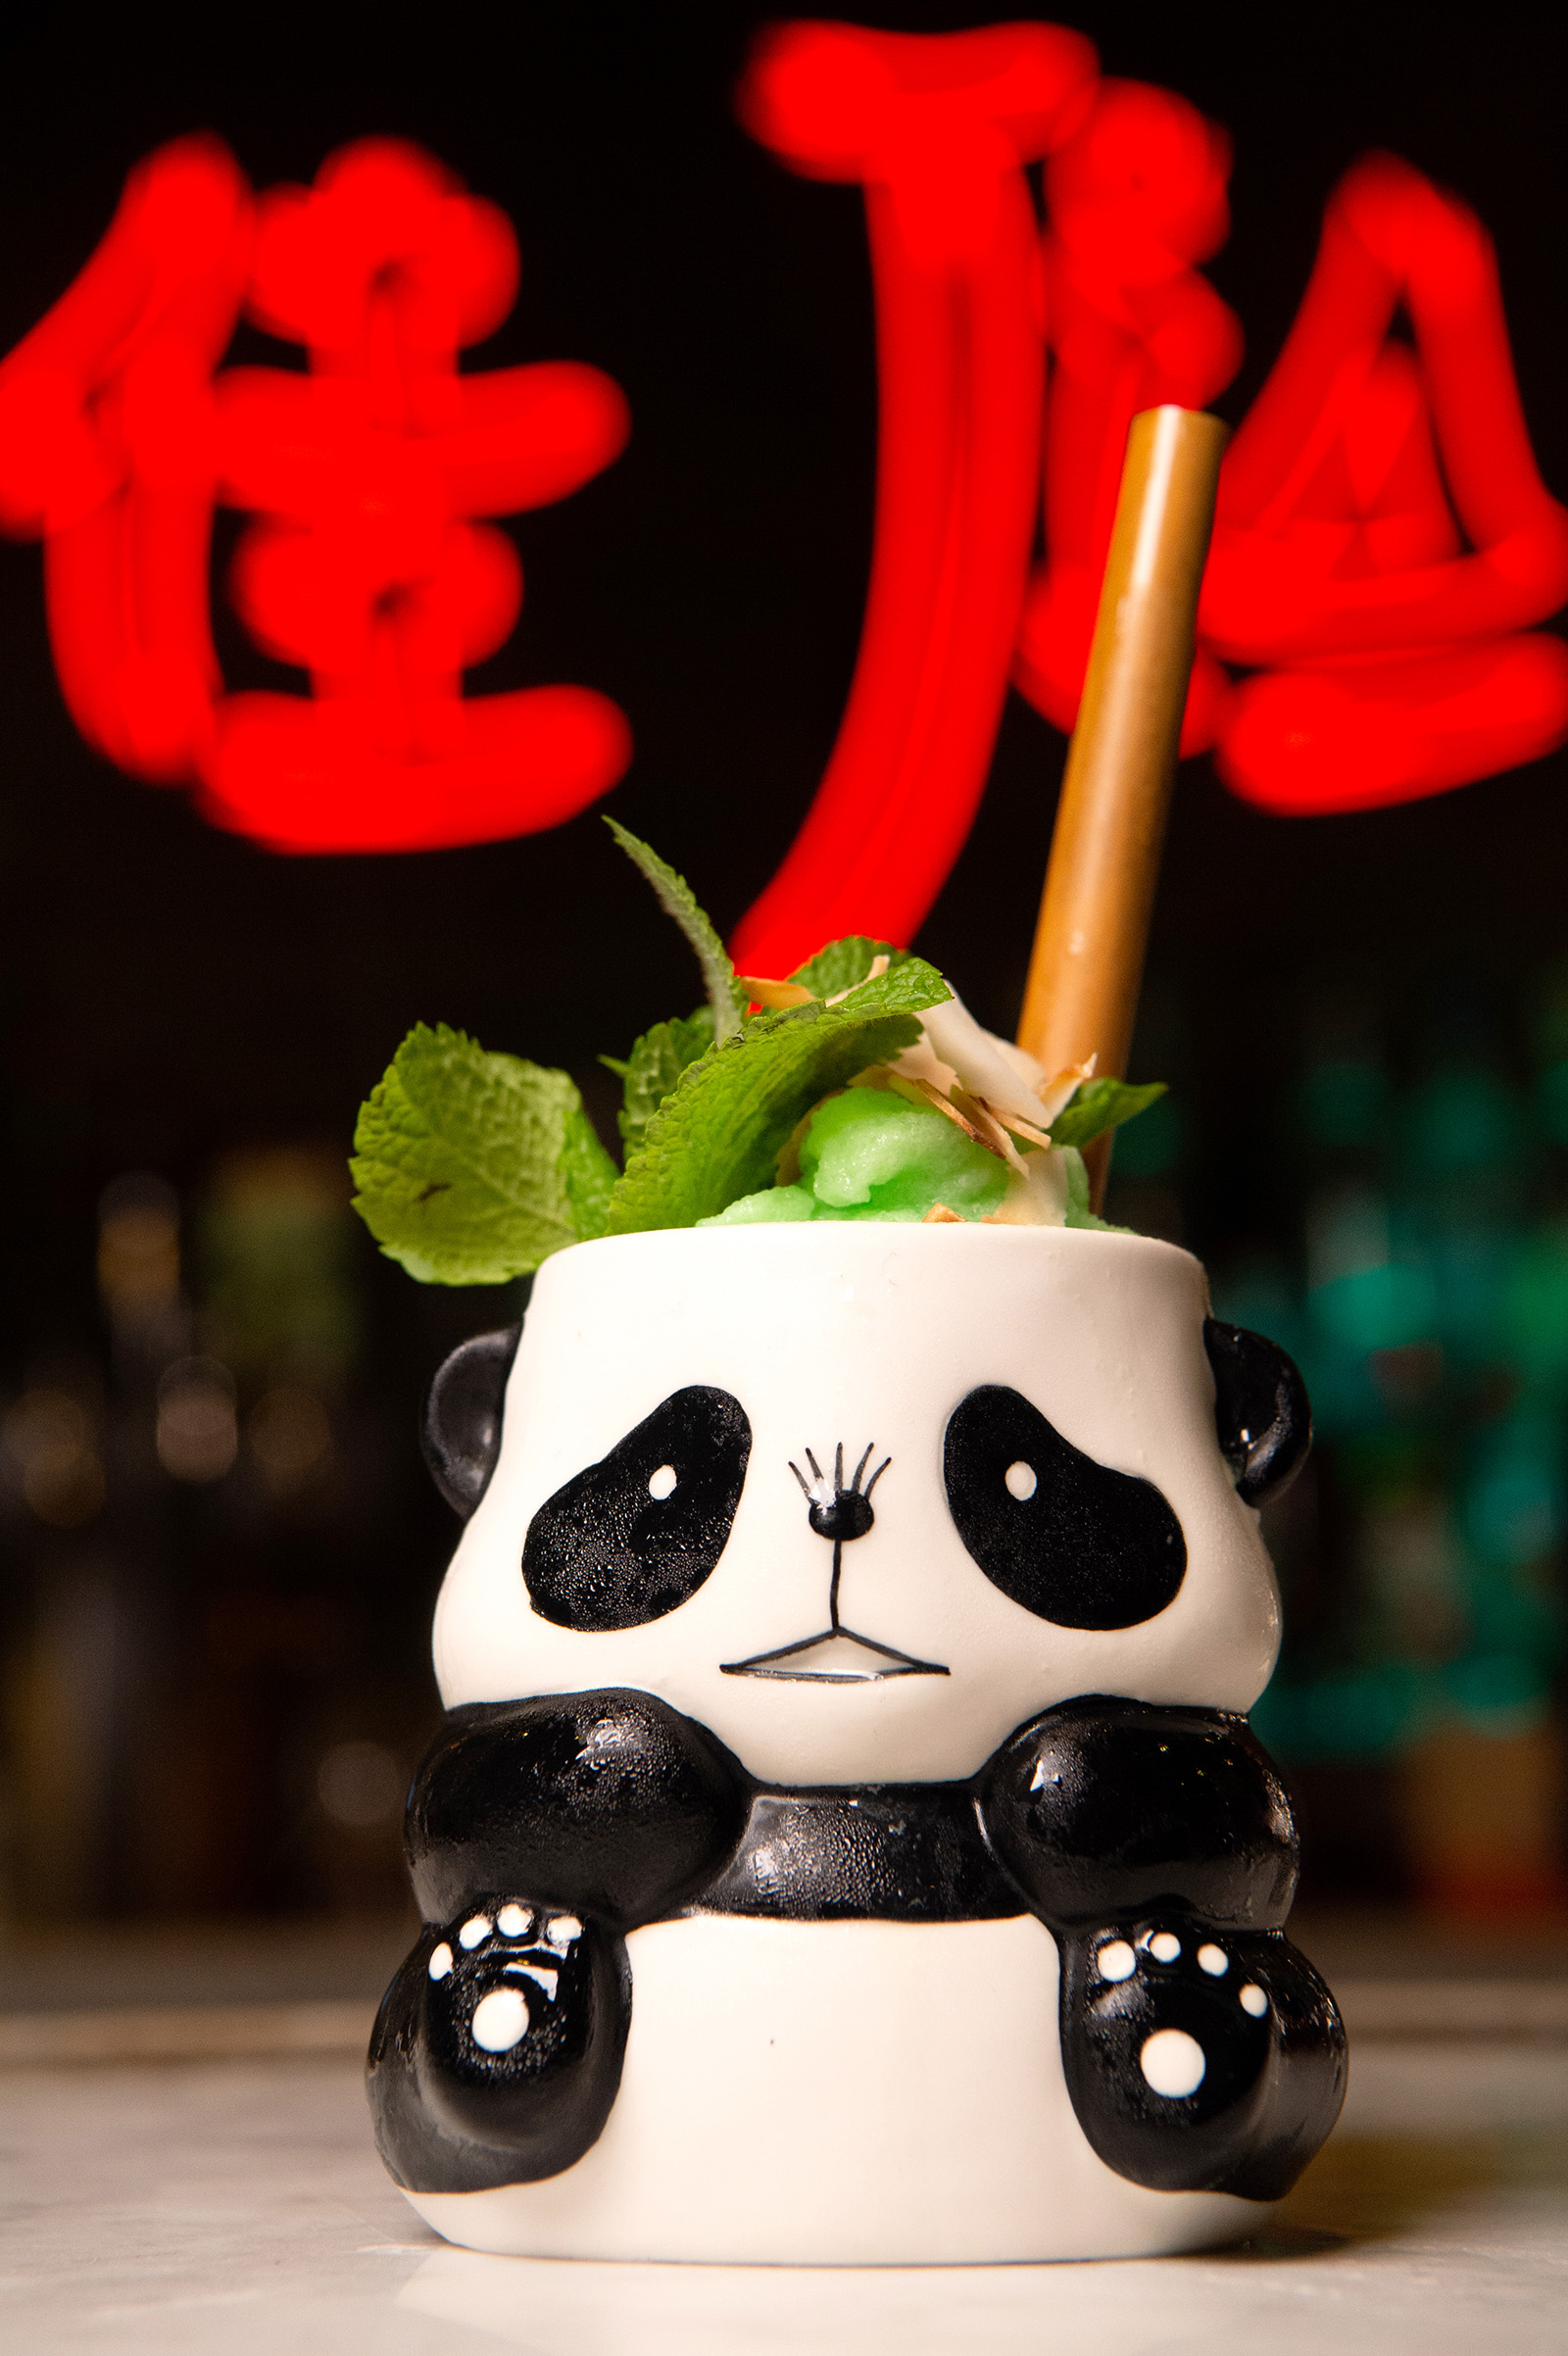 Cocktail at Jia